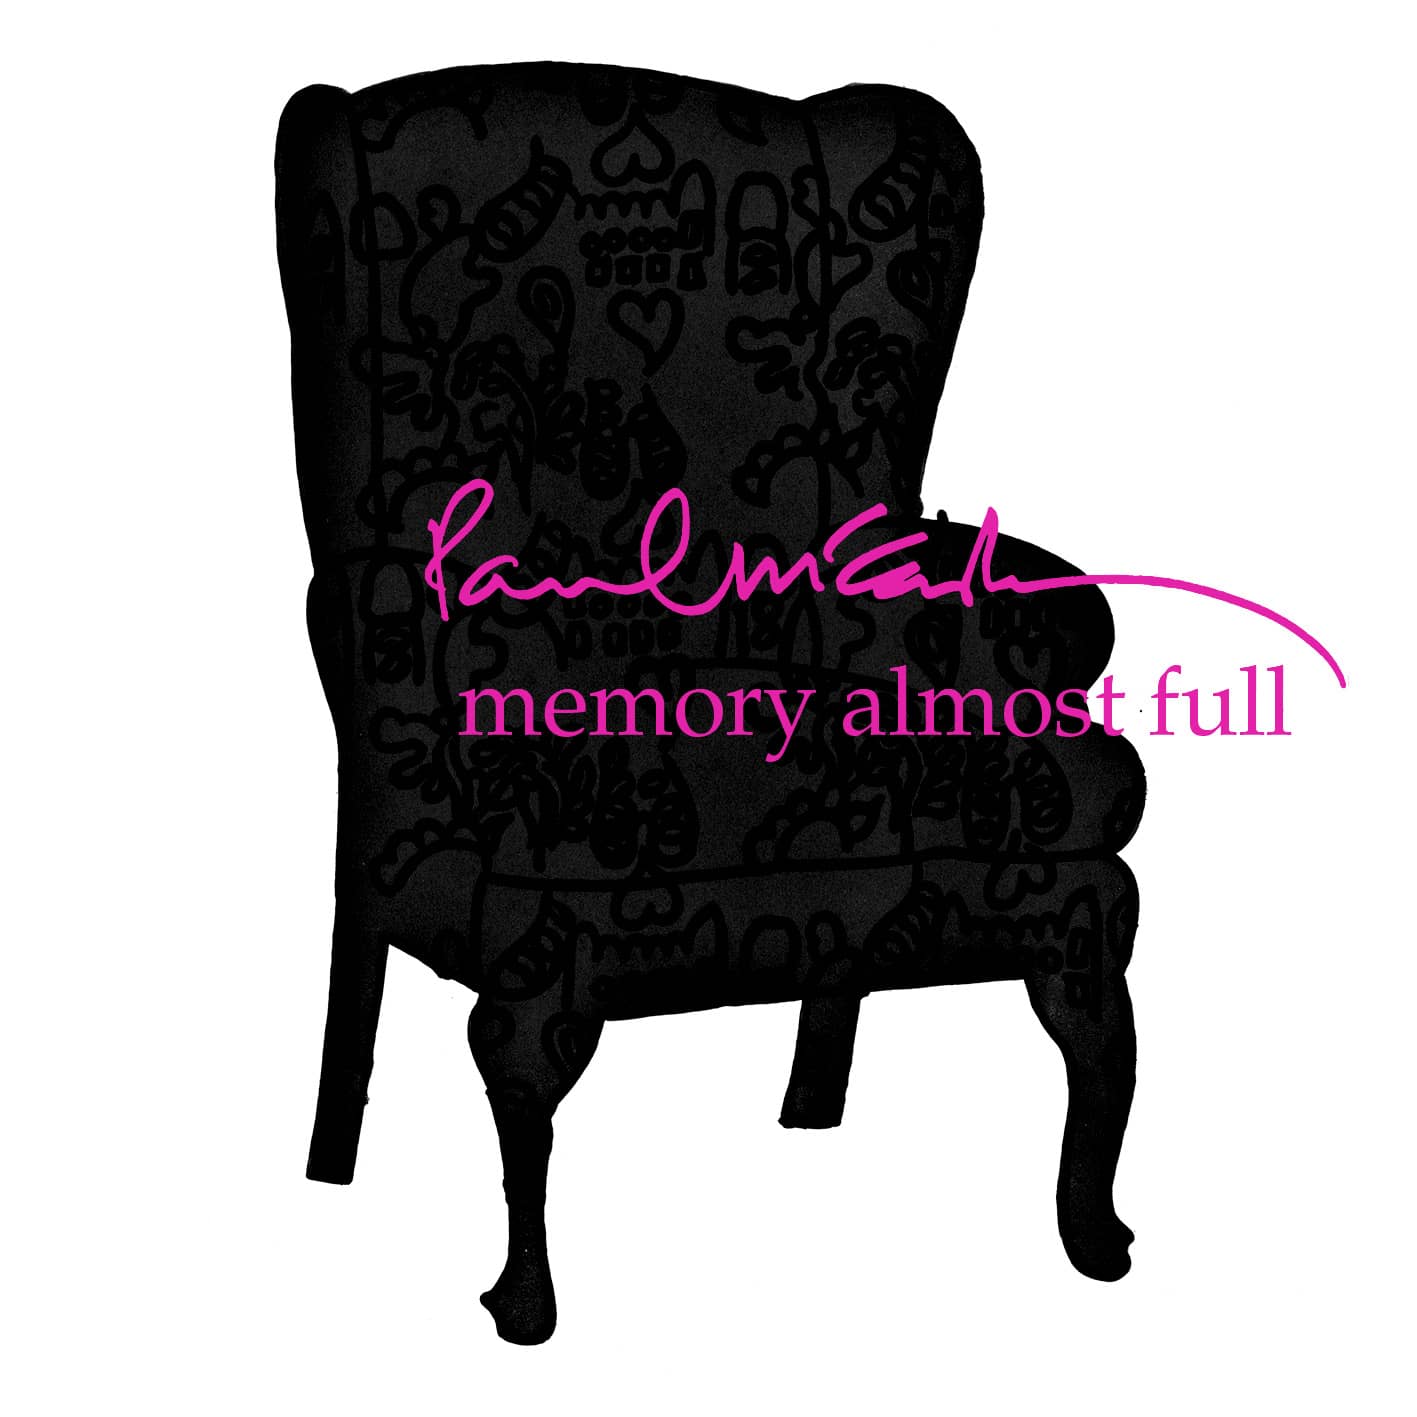 paul-mccartney-memory-almost-full.jpg